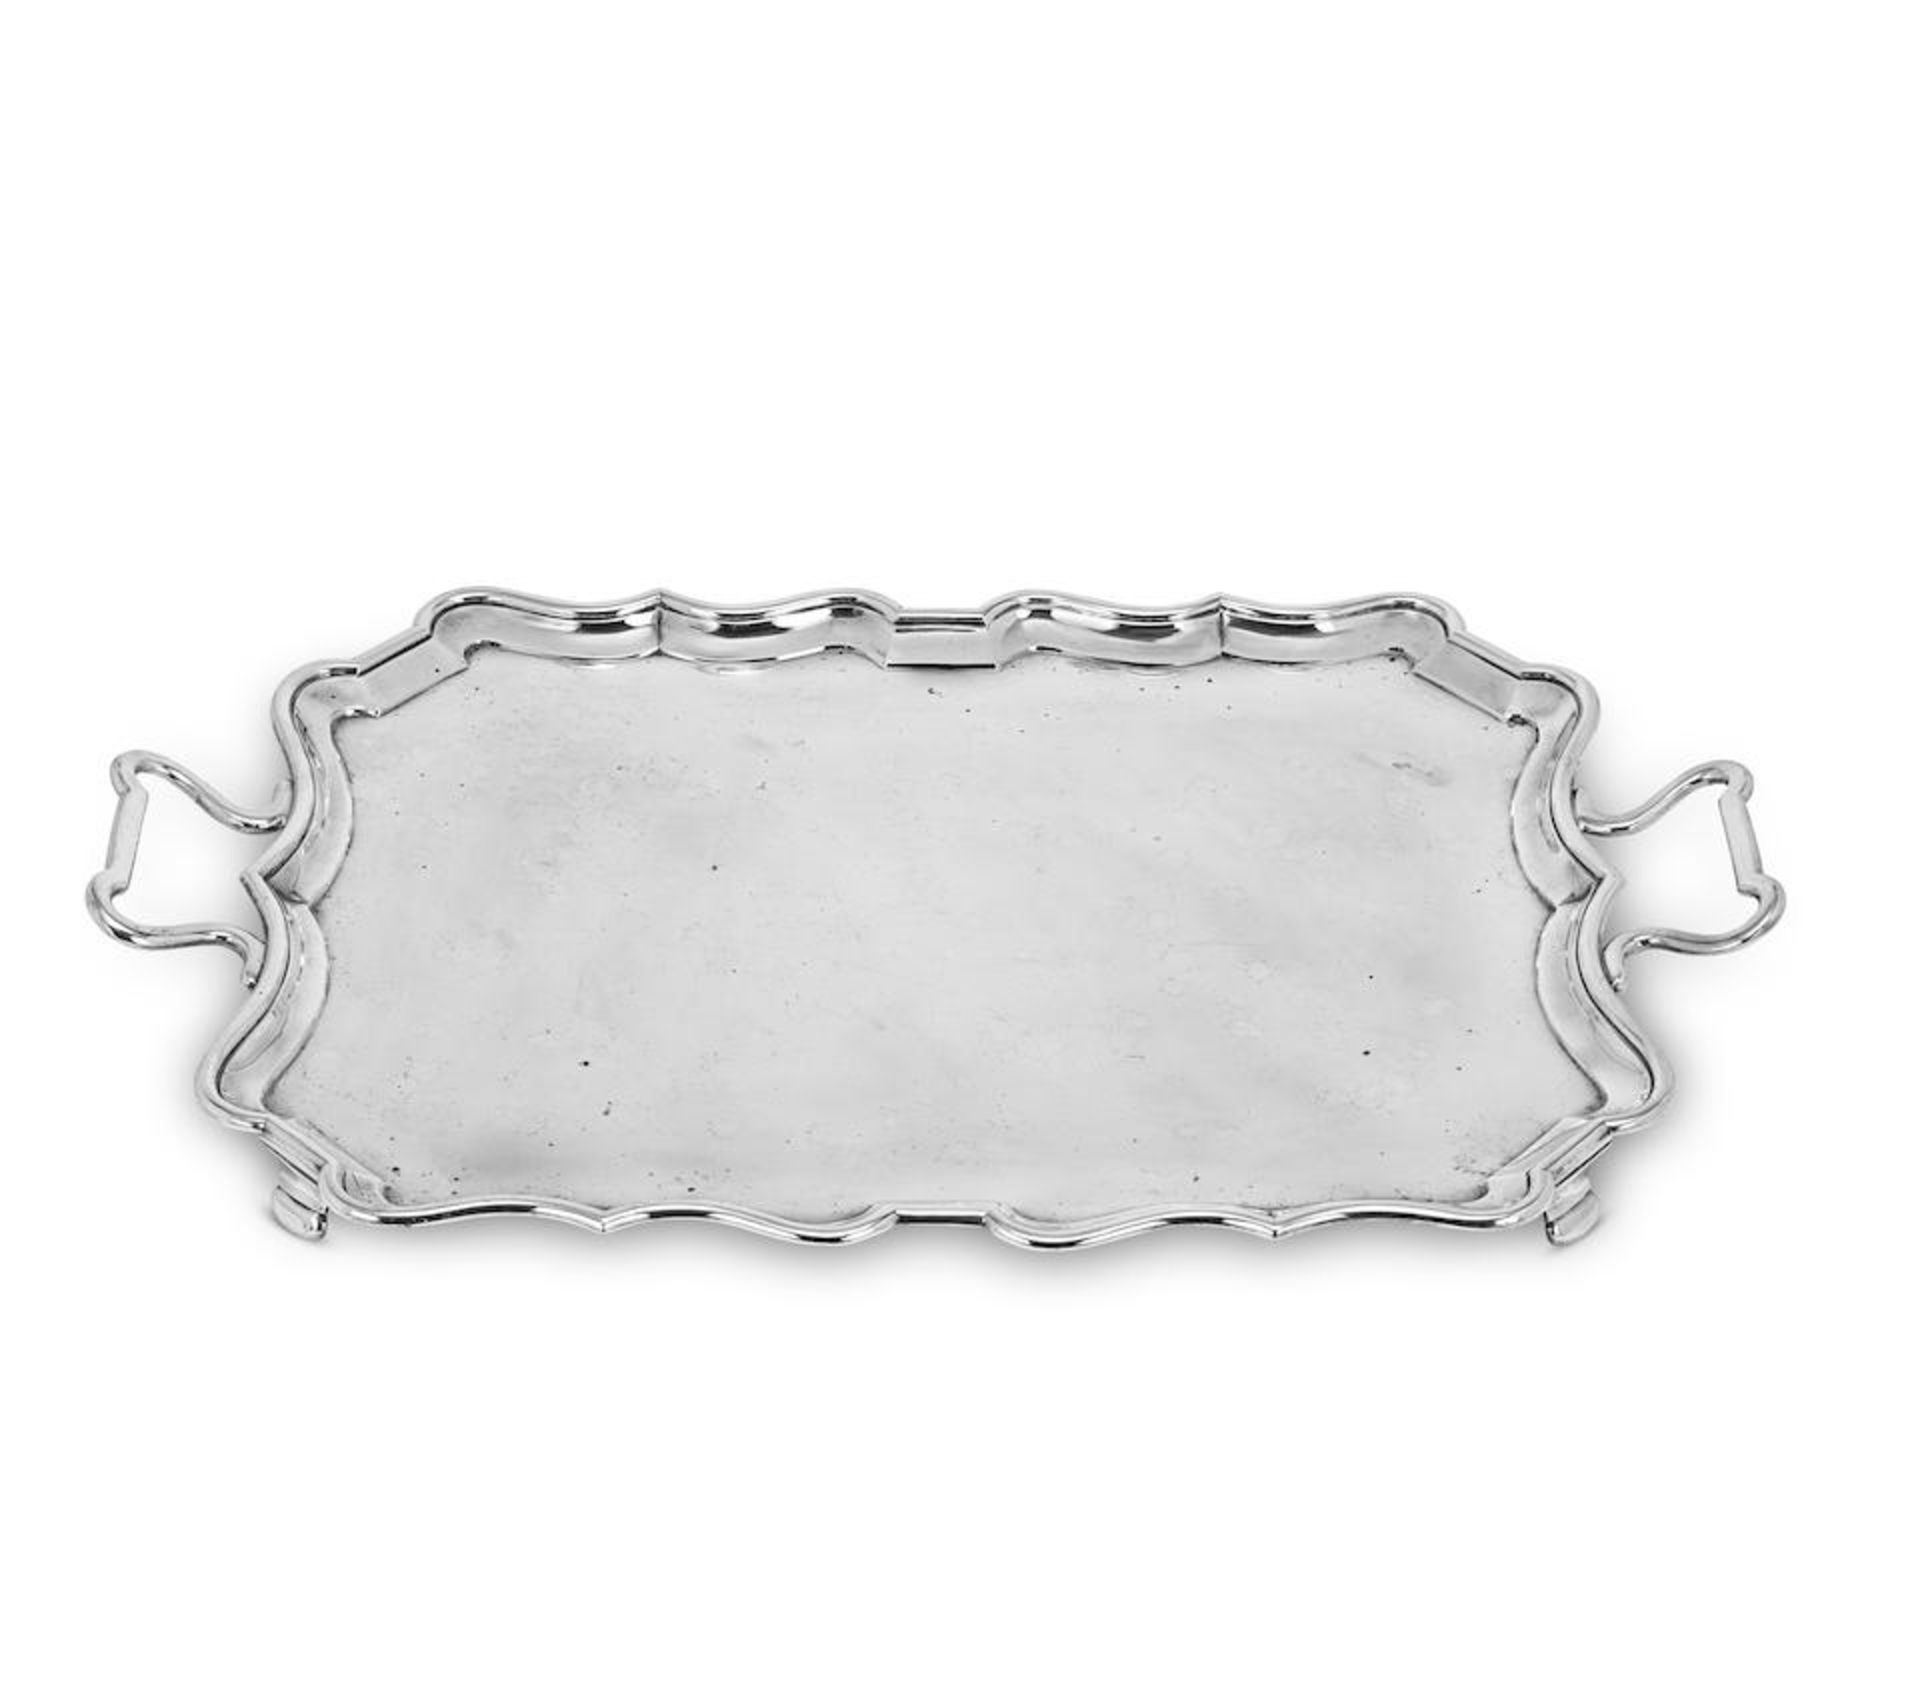 A Victorian silver two-handled tray Joseph Heming, London 1900